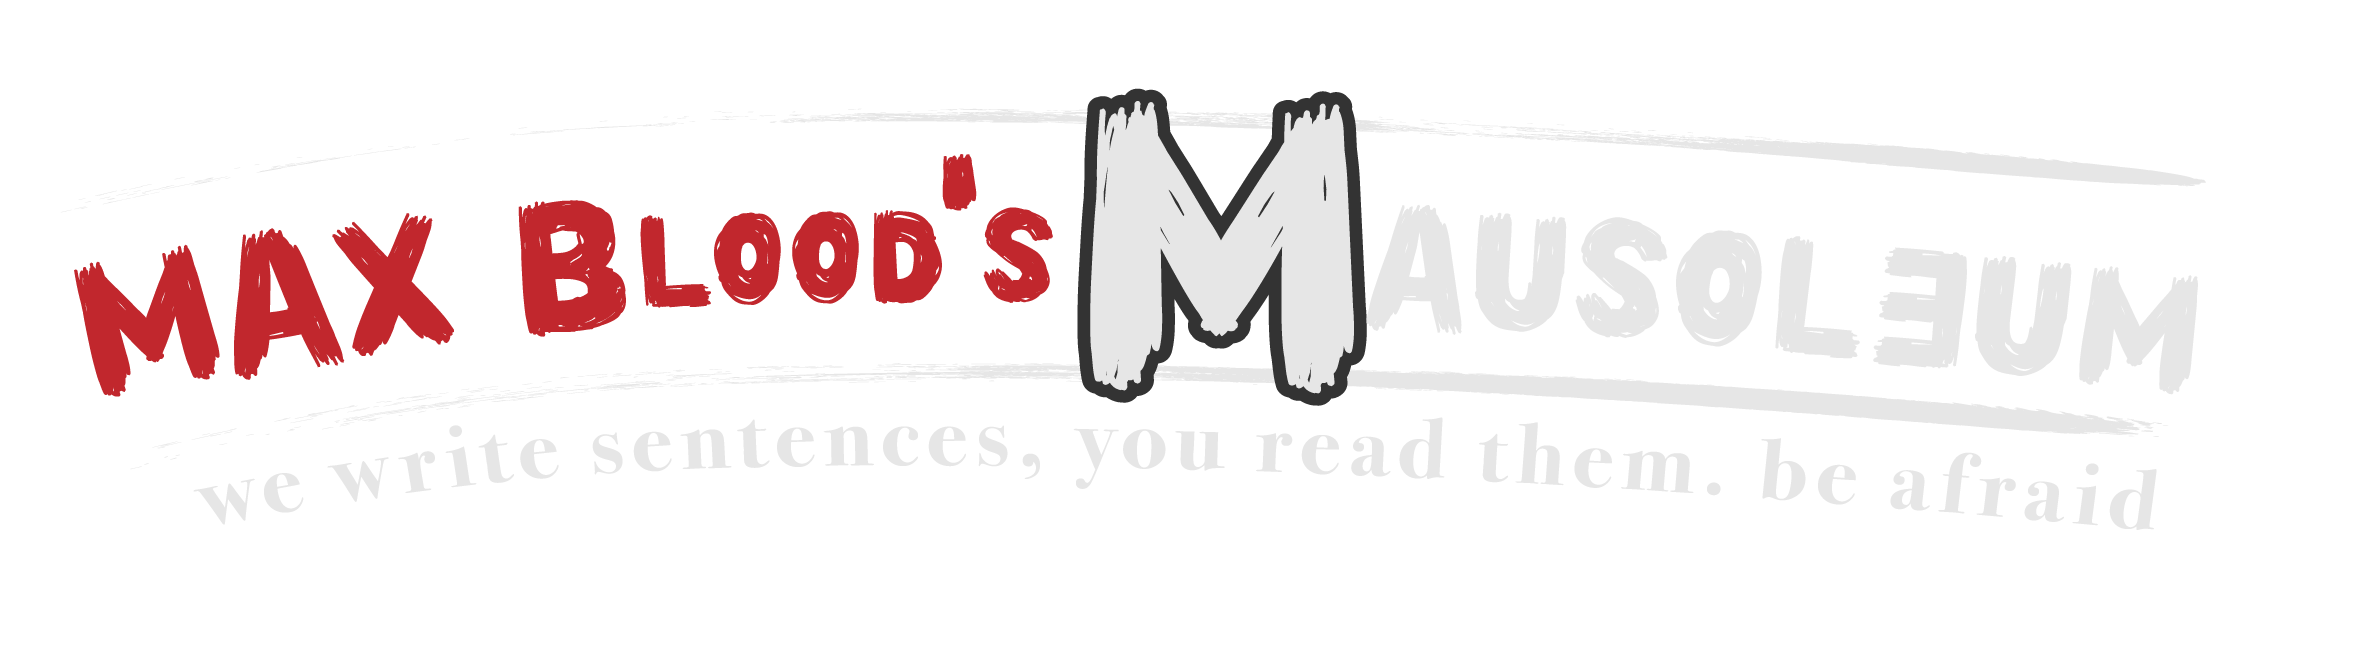 Max Blood's Mausoleum logo